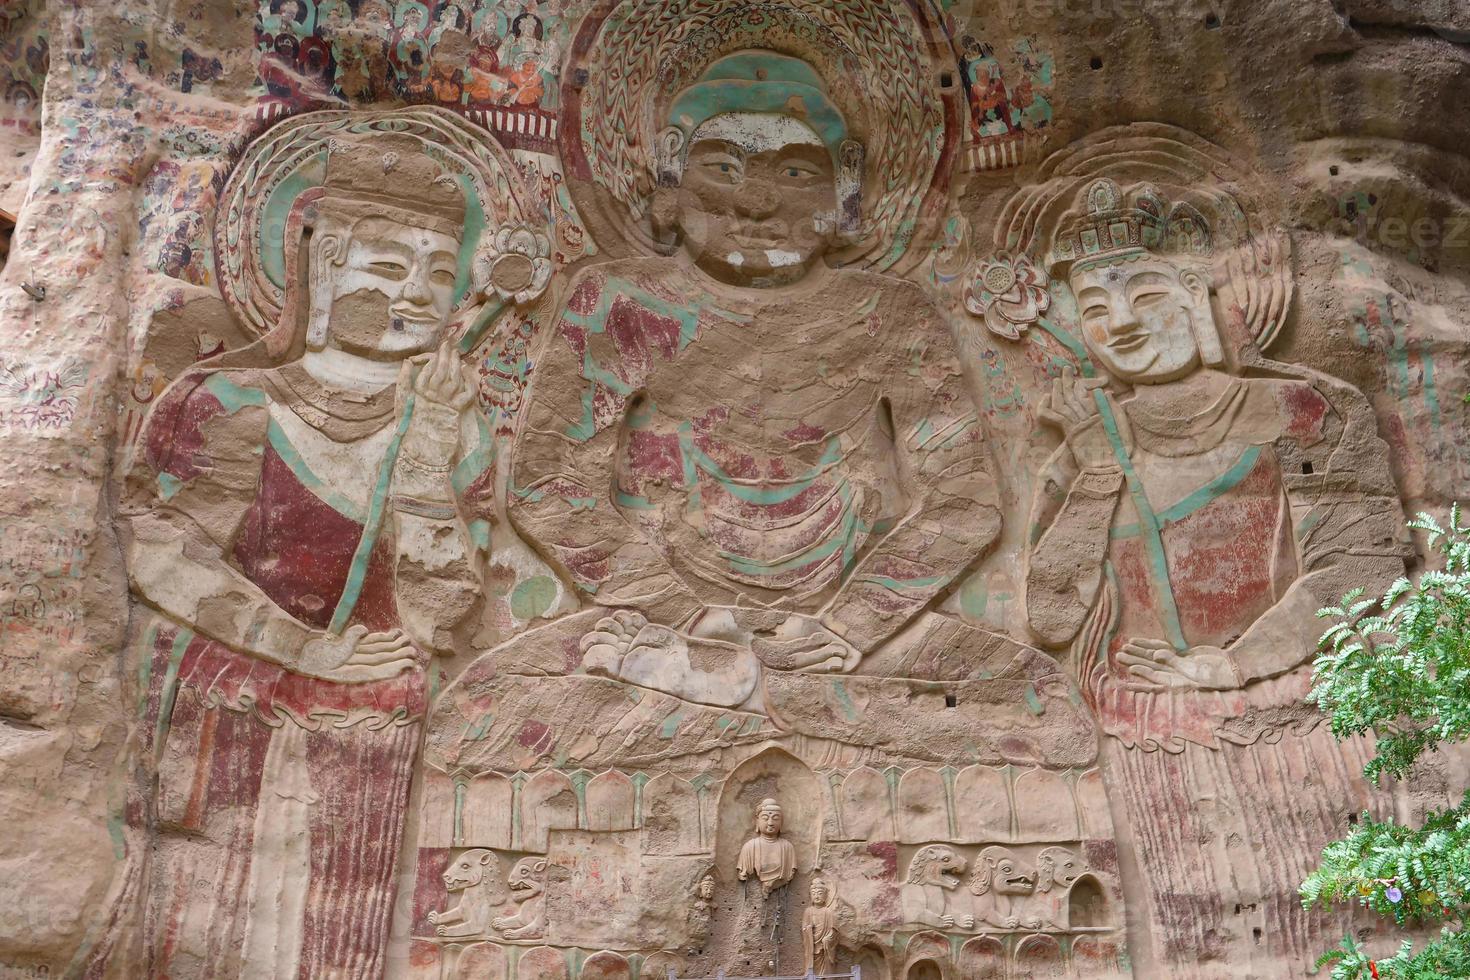 La gruta del templo de la Shao pintura en relieve en tianshui wushan china foto